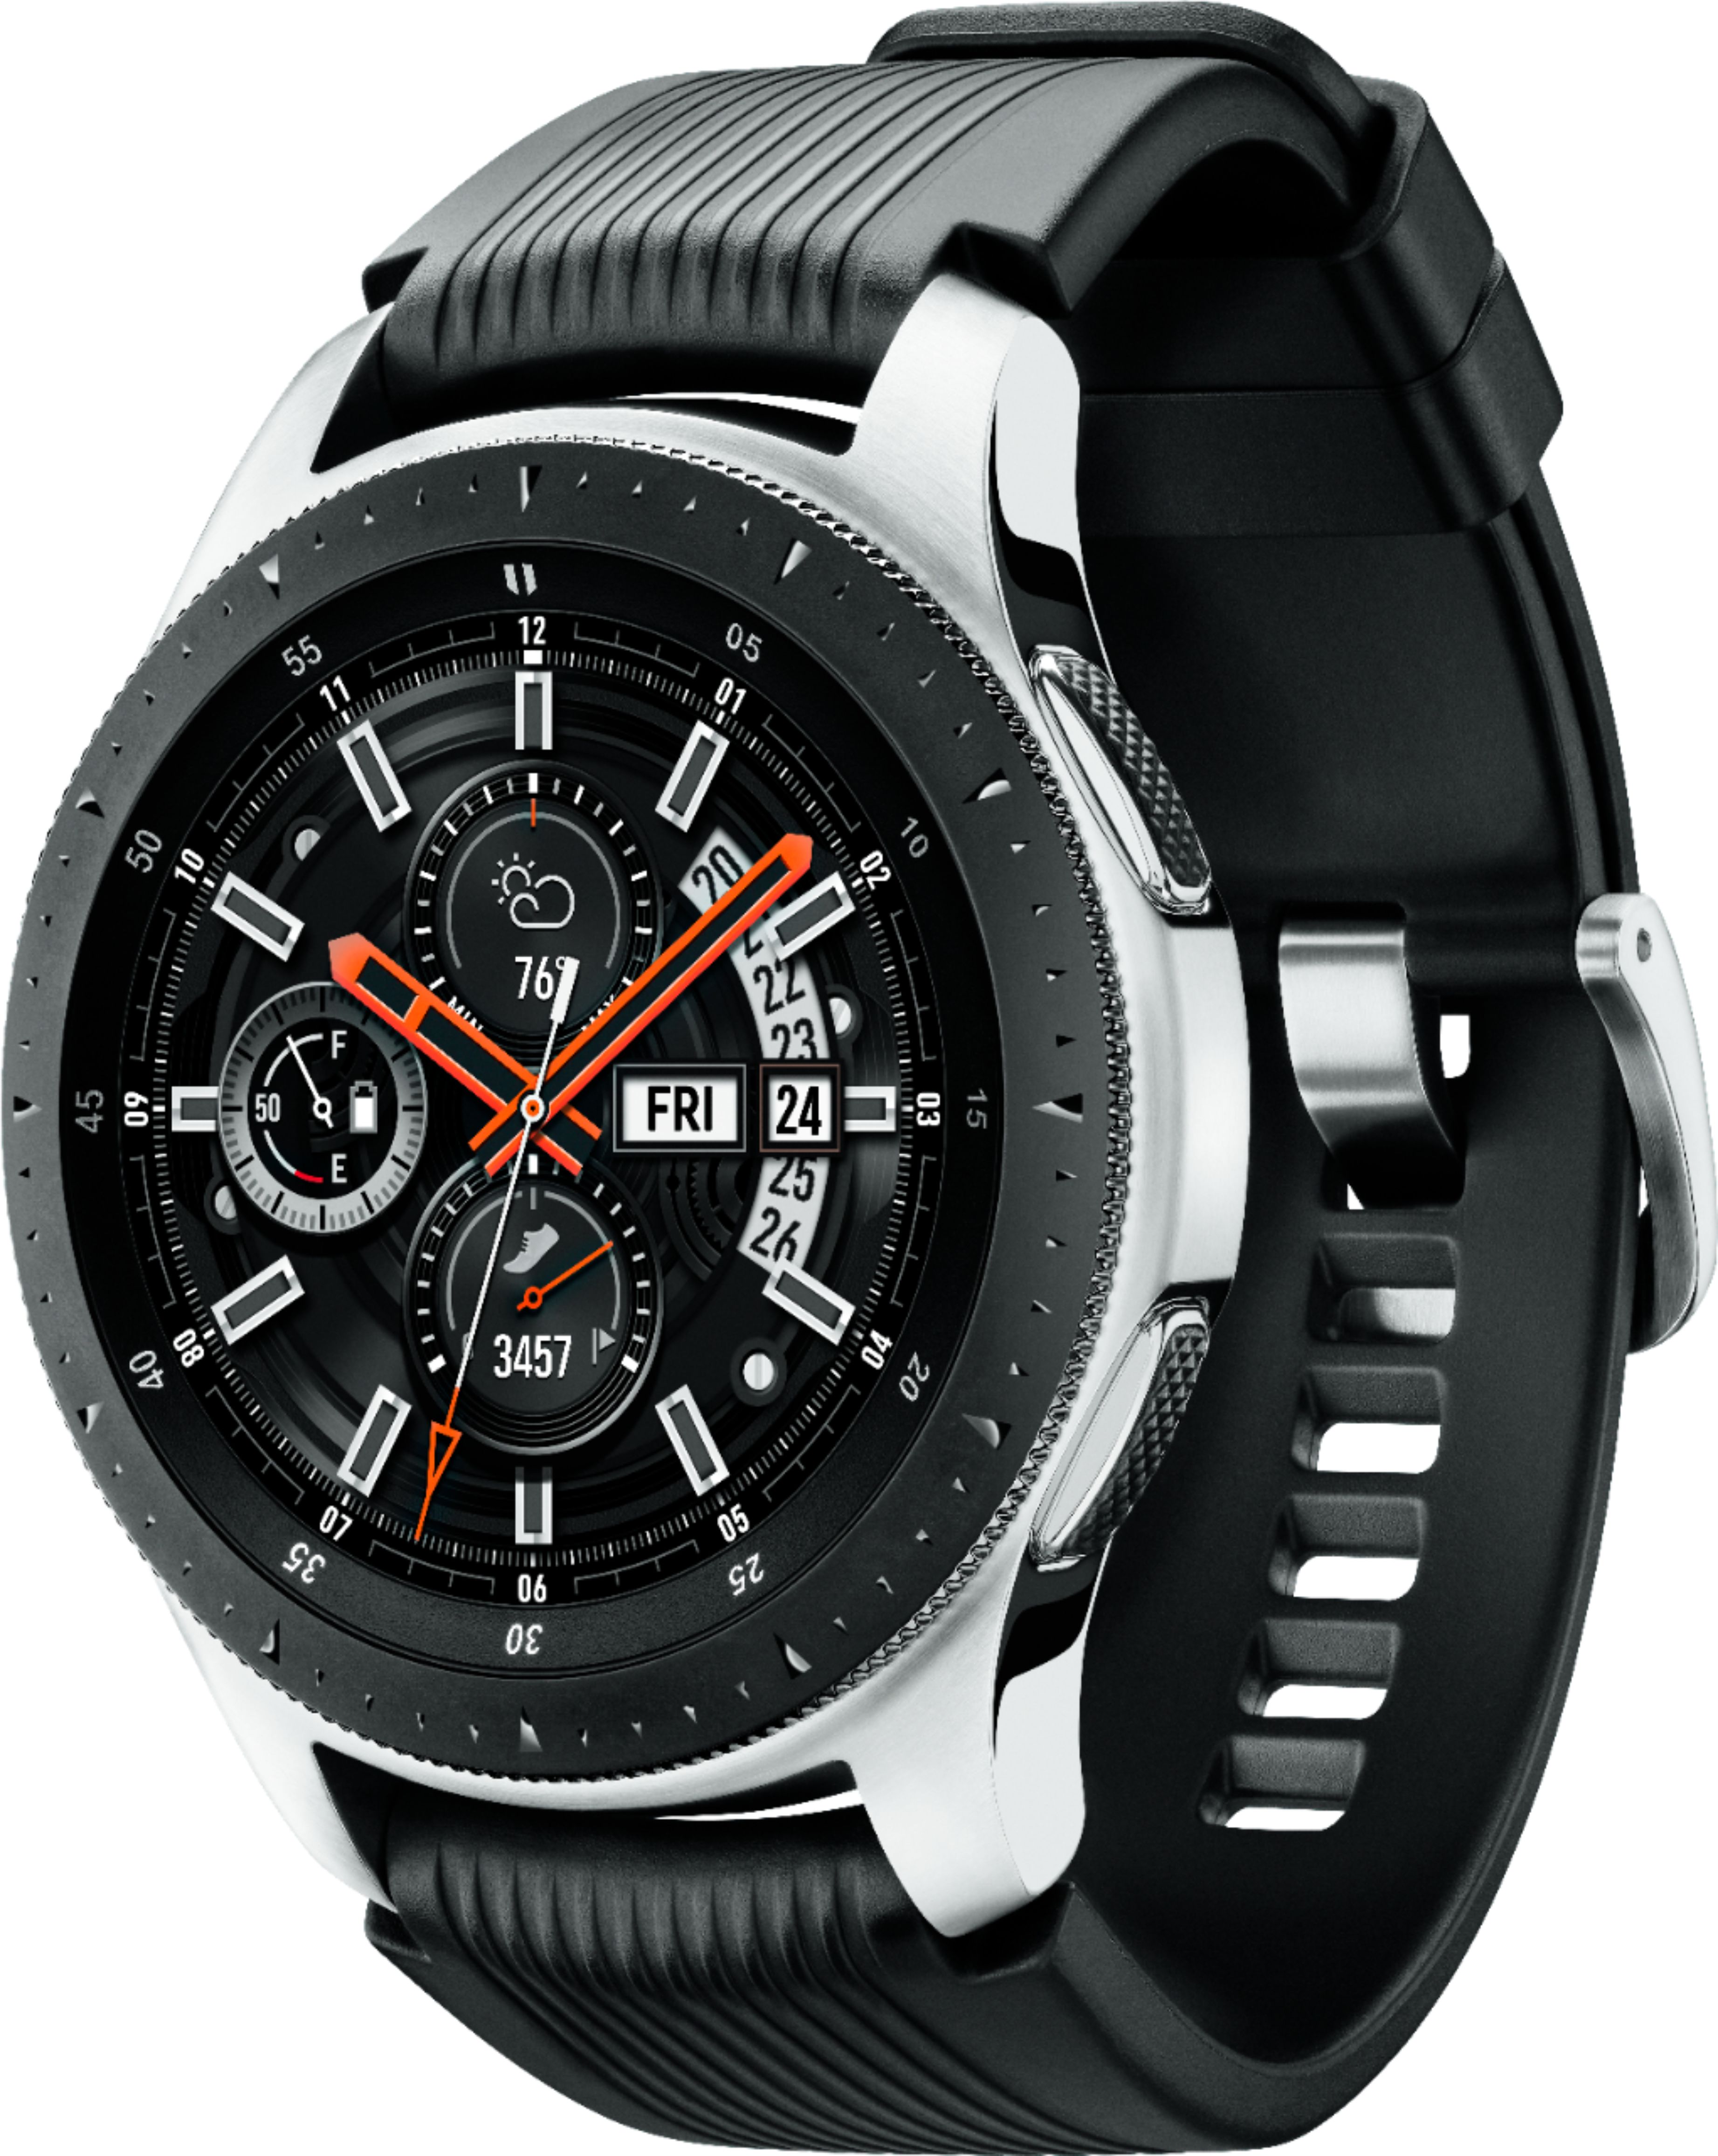 Samsung Galaxy Watch Smartwatch 46mm 